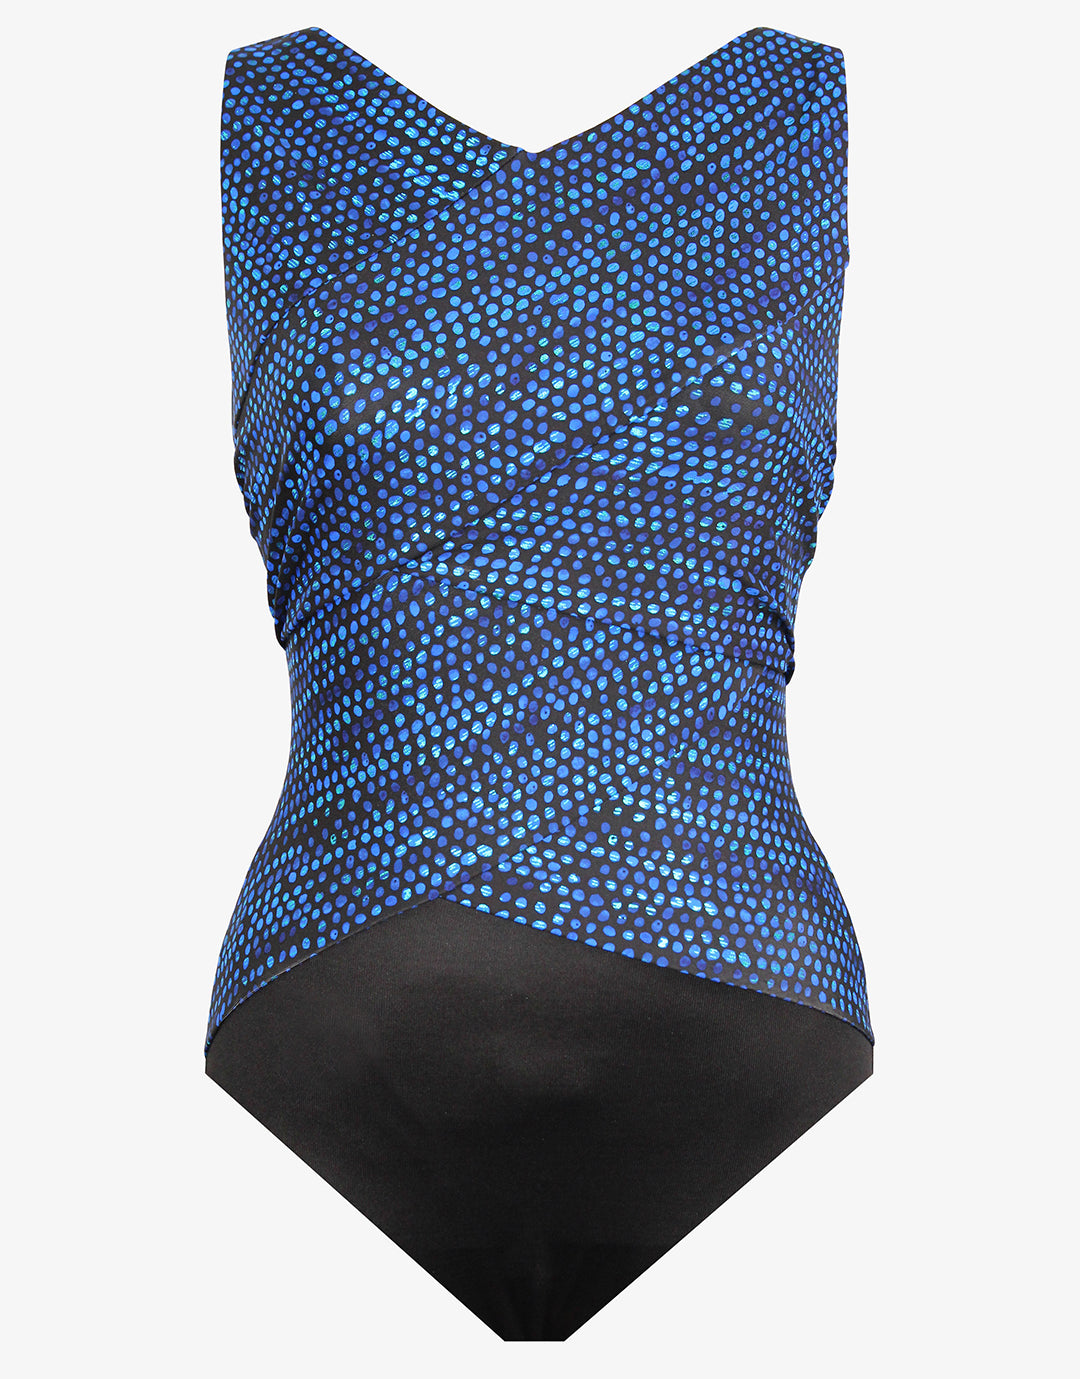 Dot Com Brio Swimsuit - Blue - Simply Beach UK